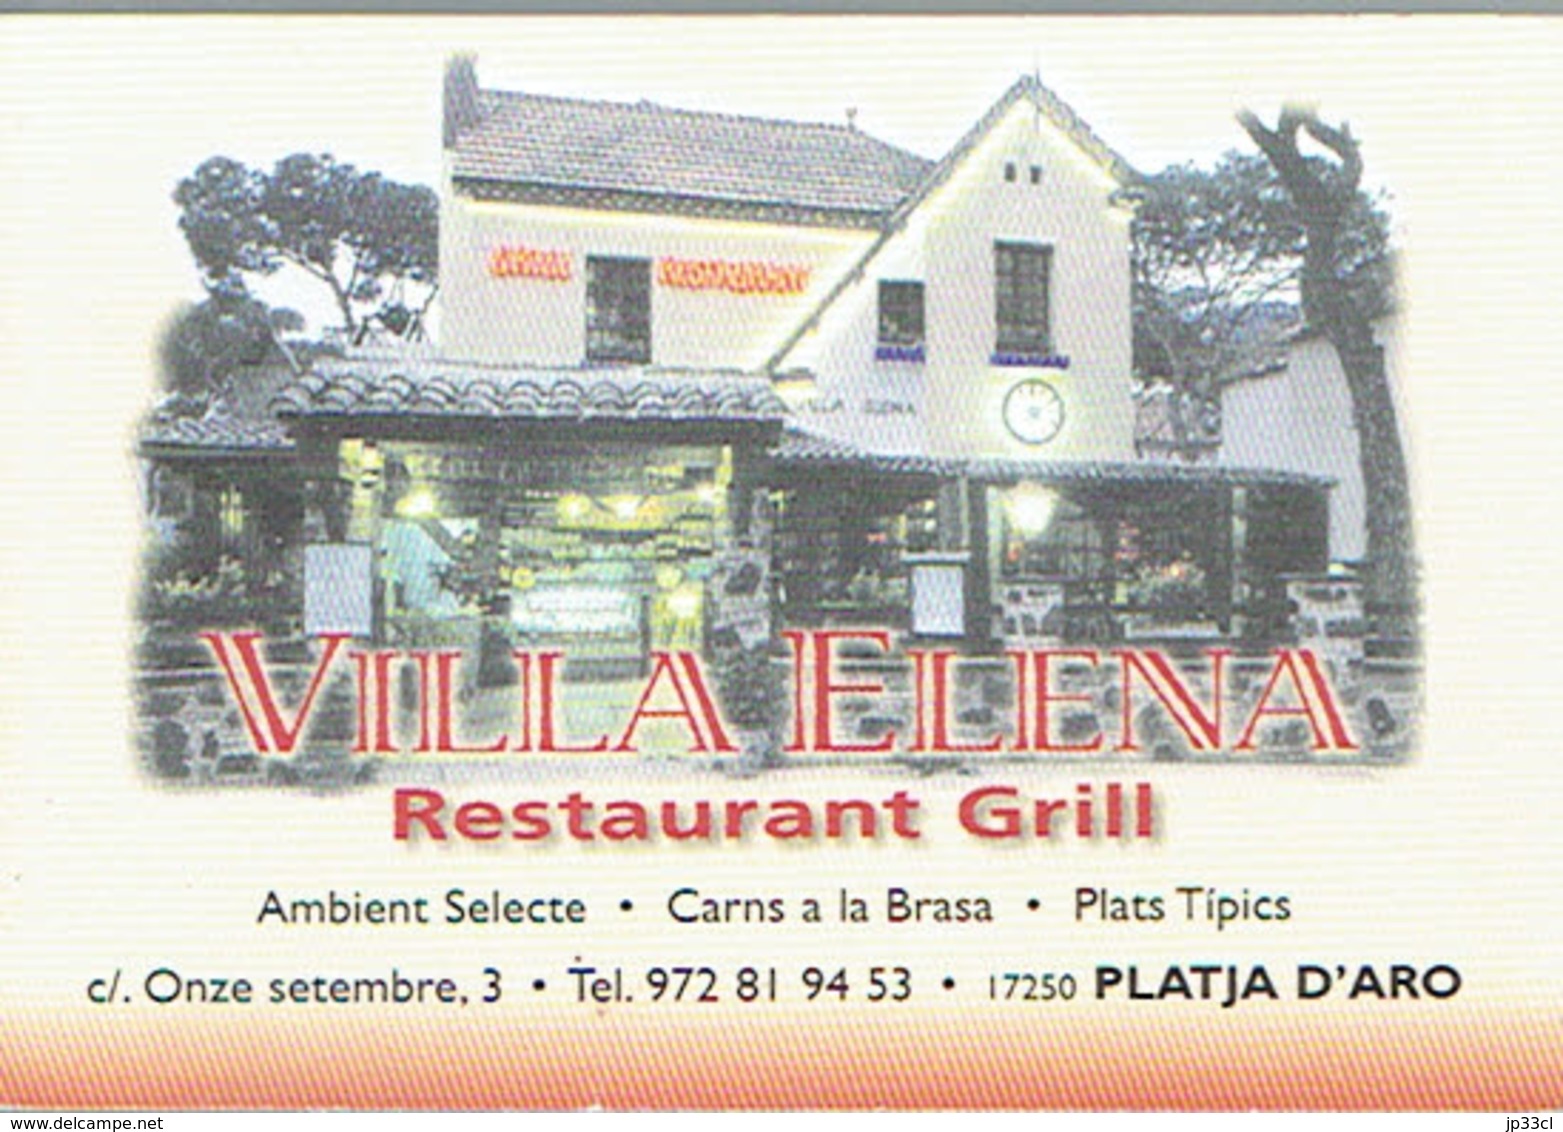 Carte De Visite Du Restaurant Grill Villa Elena, Playa De Aro (Espagne) Vers 1999/2000 - Visiting Cards